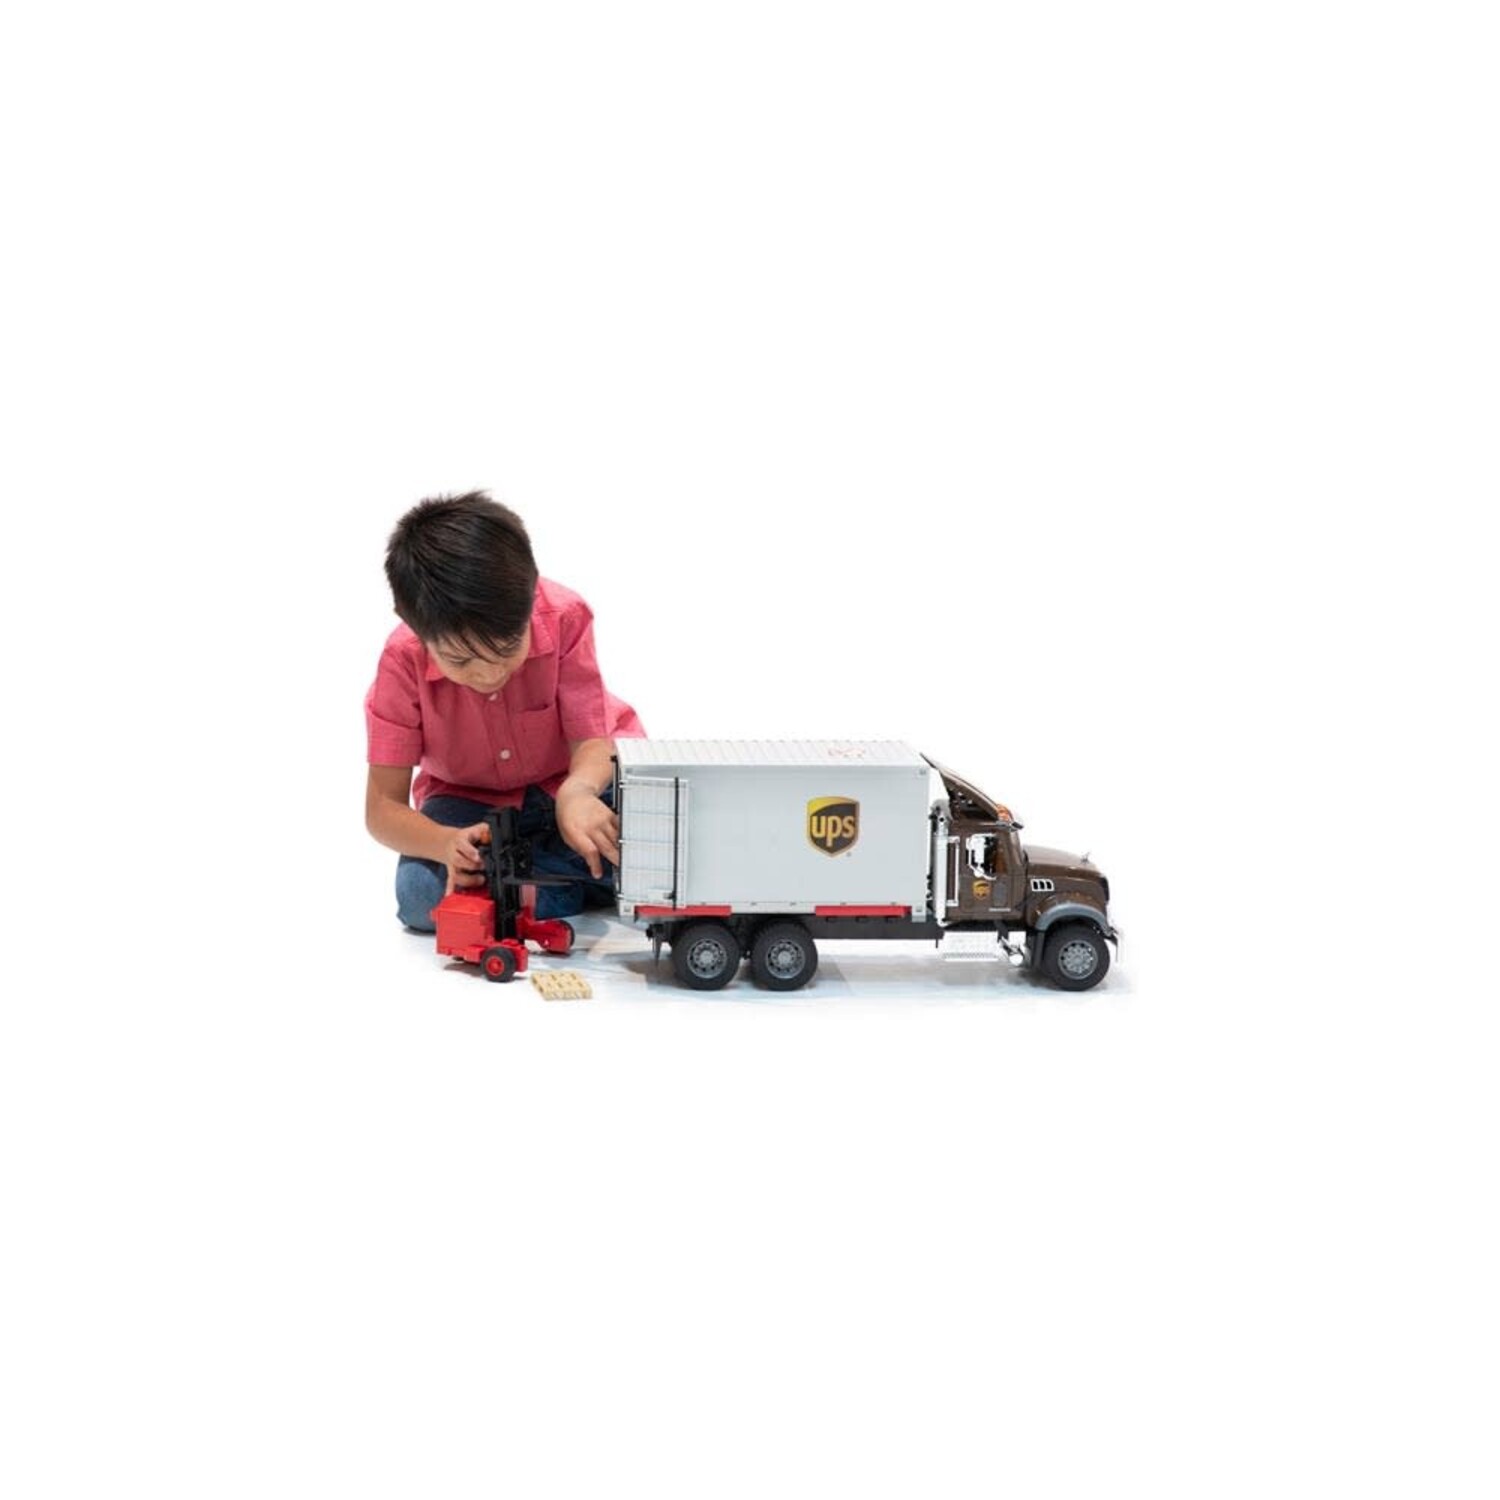 Bruder Toys 02828 Mack Granite UPS Logistics Truck with Forklift  Vehicles-Toy